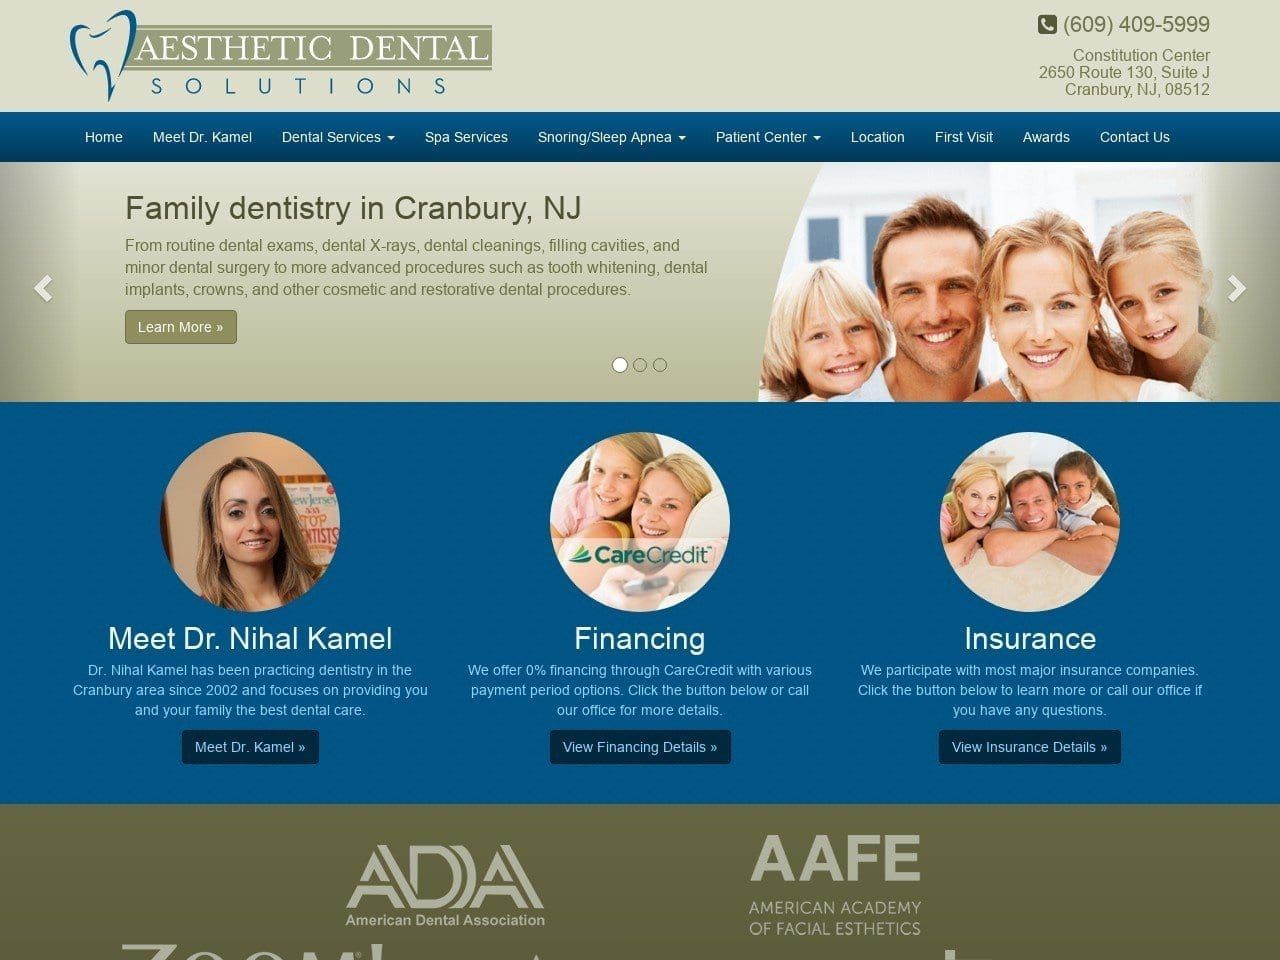 Aesthetic Dental Solutions Website Screenshot from njbestsmiles.com